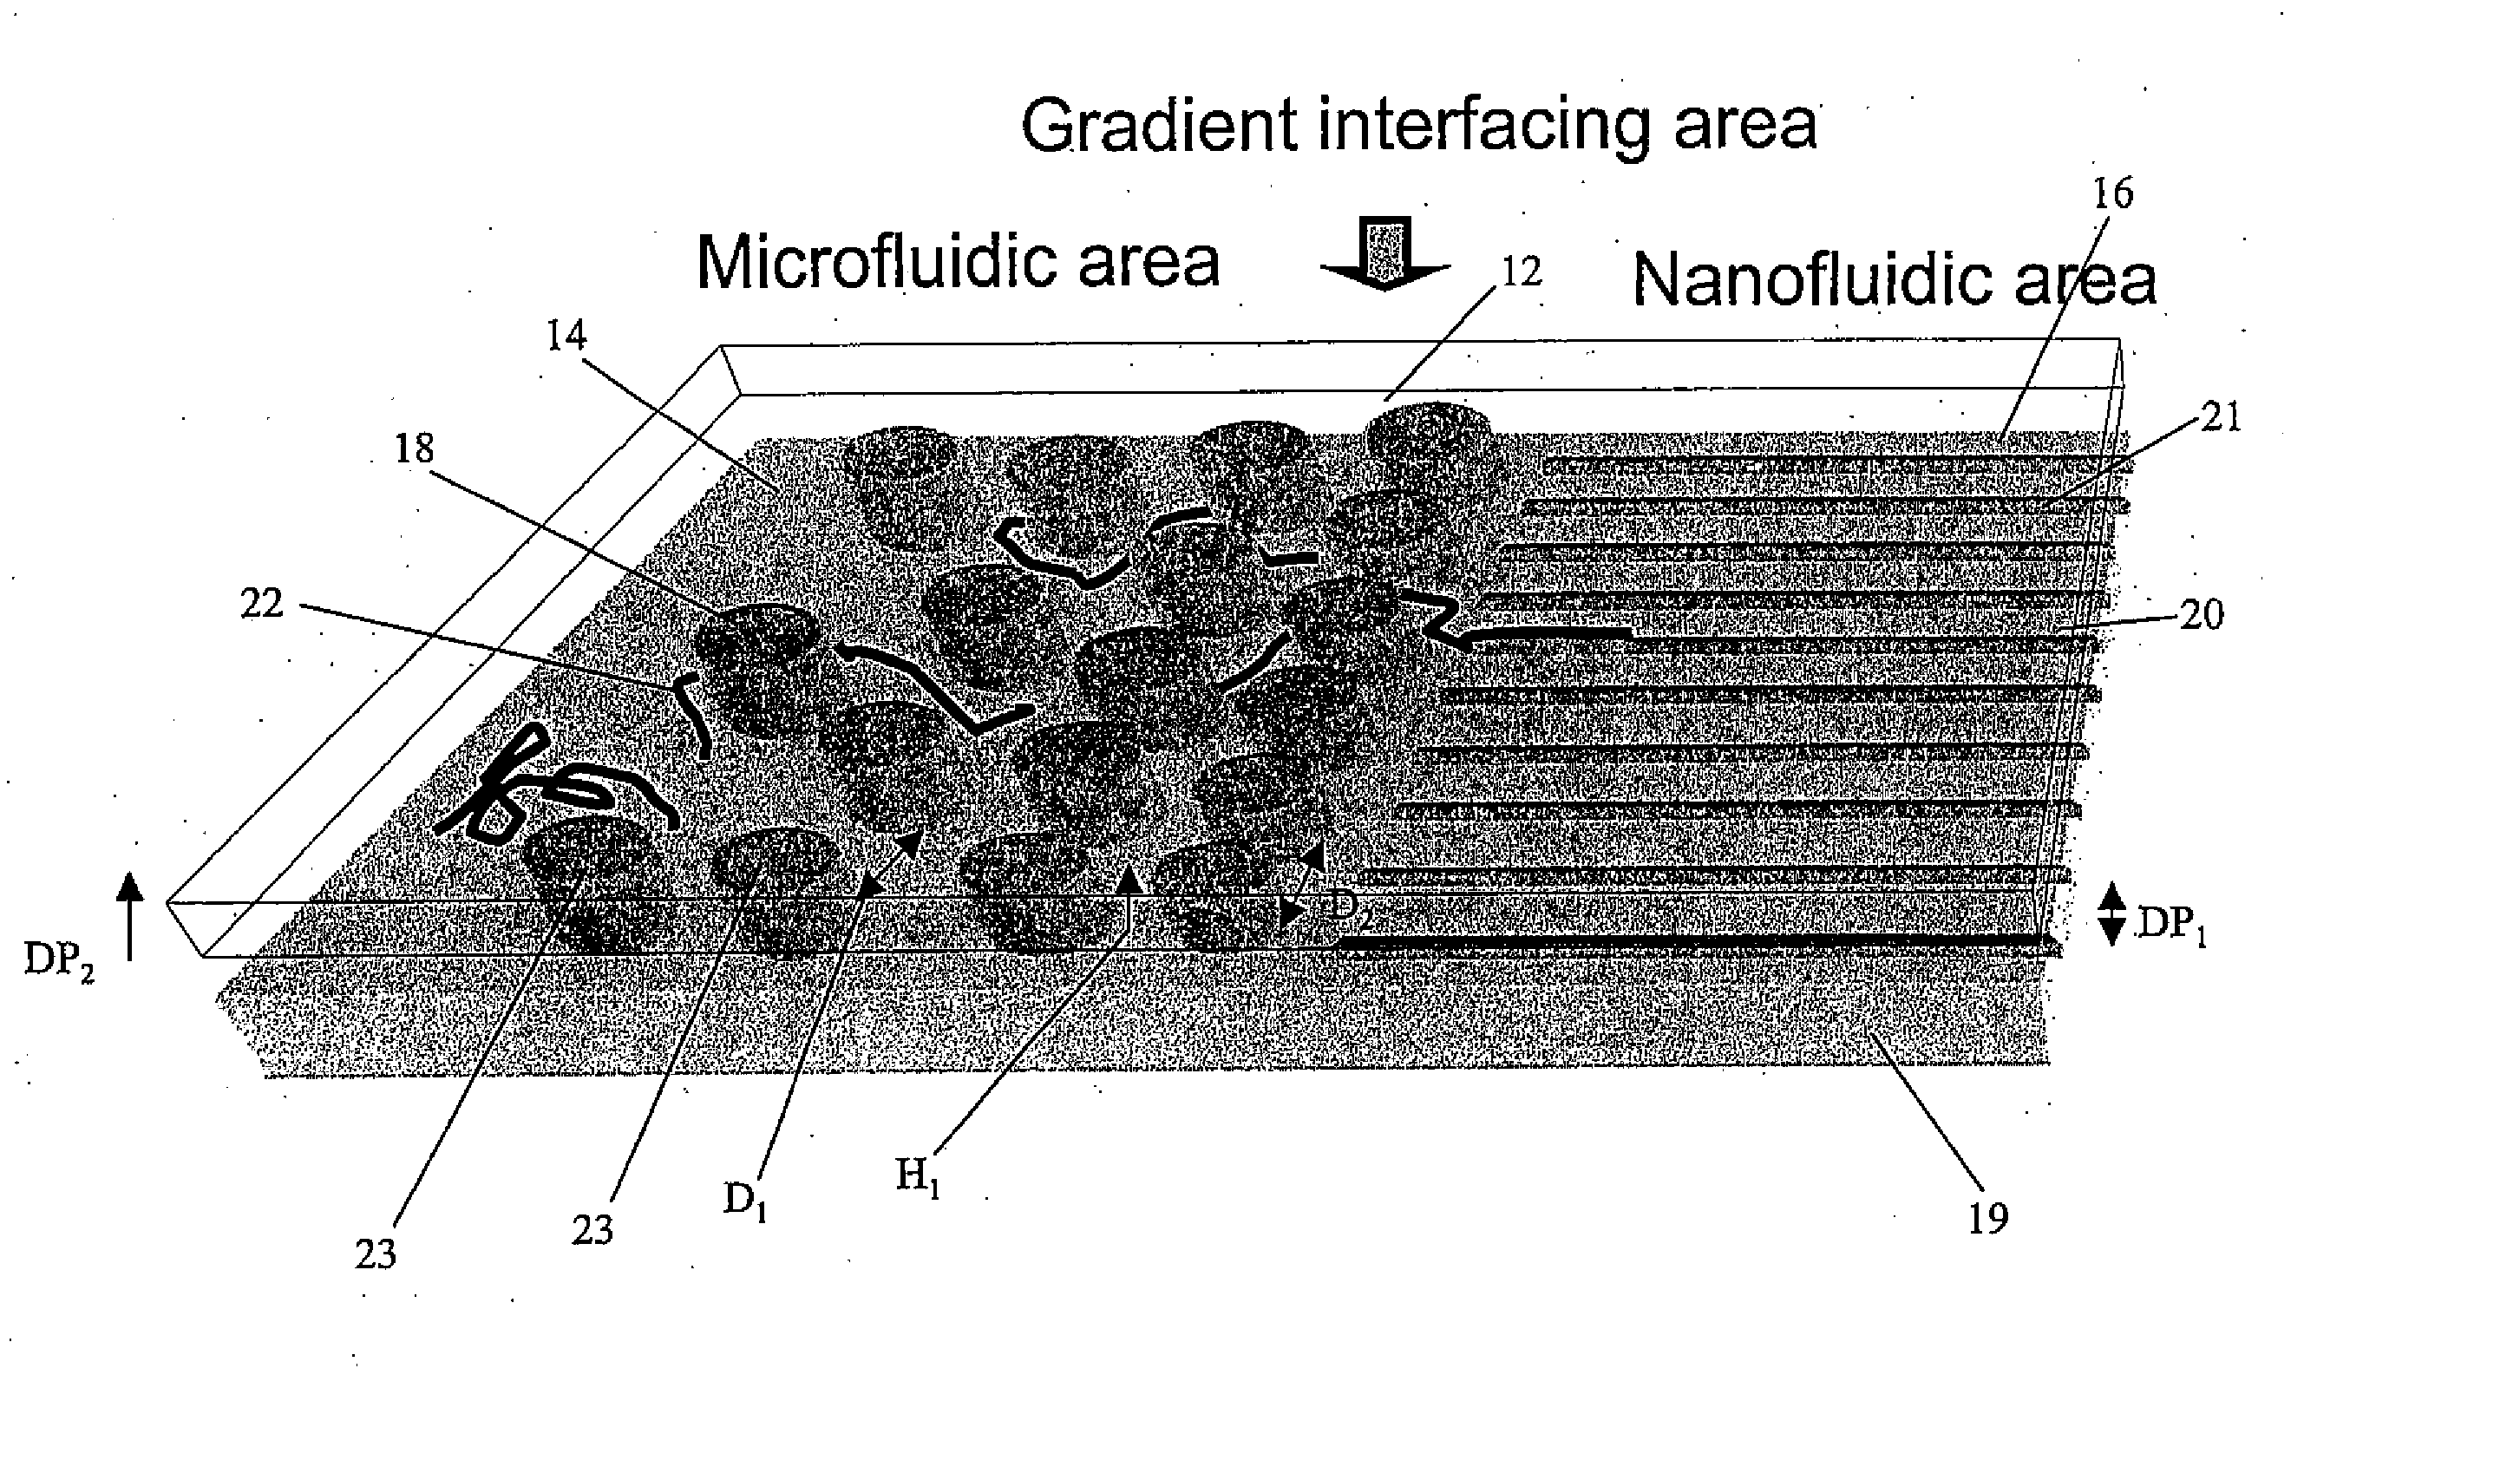 Gradient structures interfacing microfluidics and nanofluidics, methods for fabrication and uses thereof